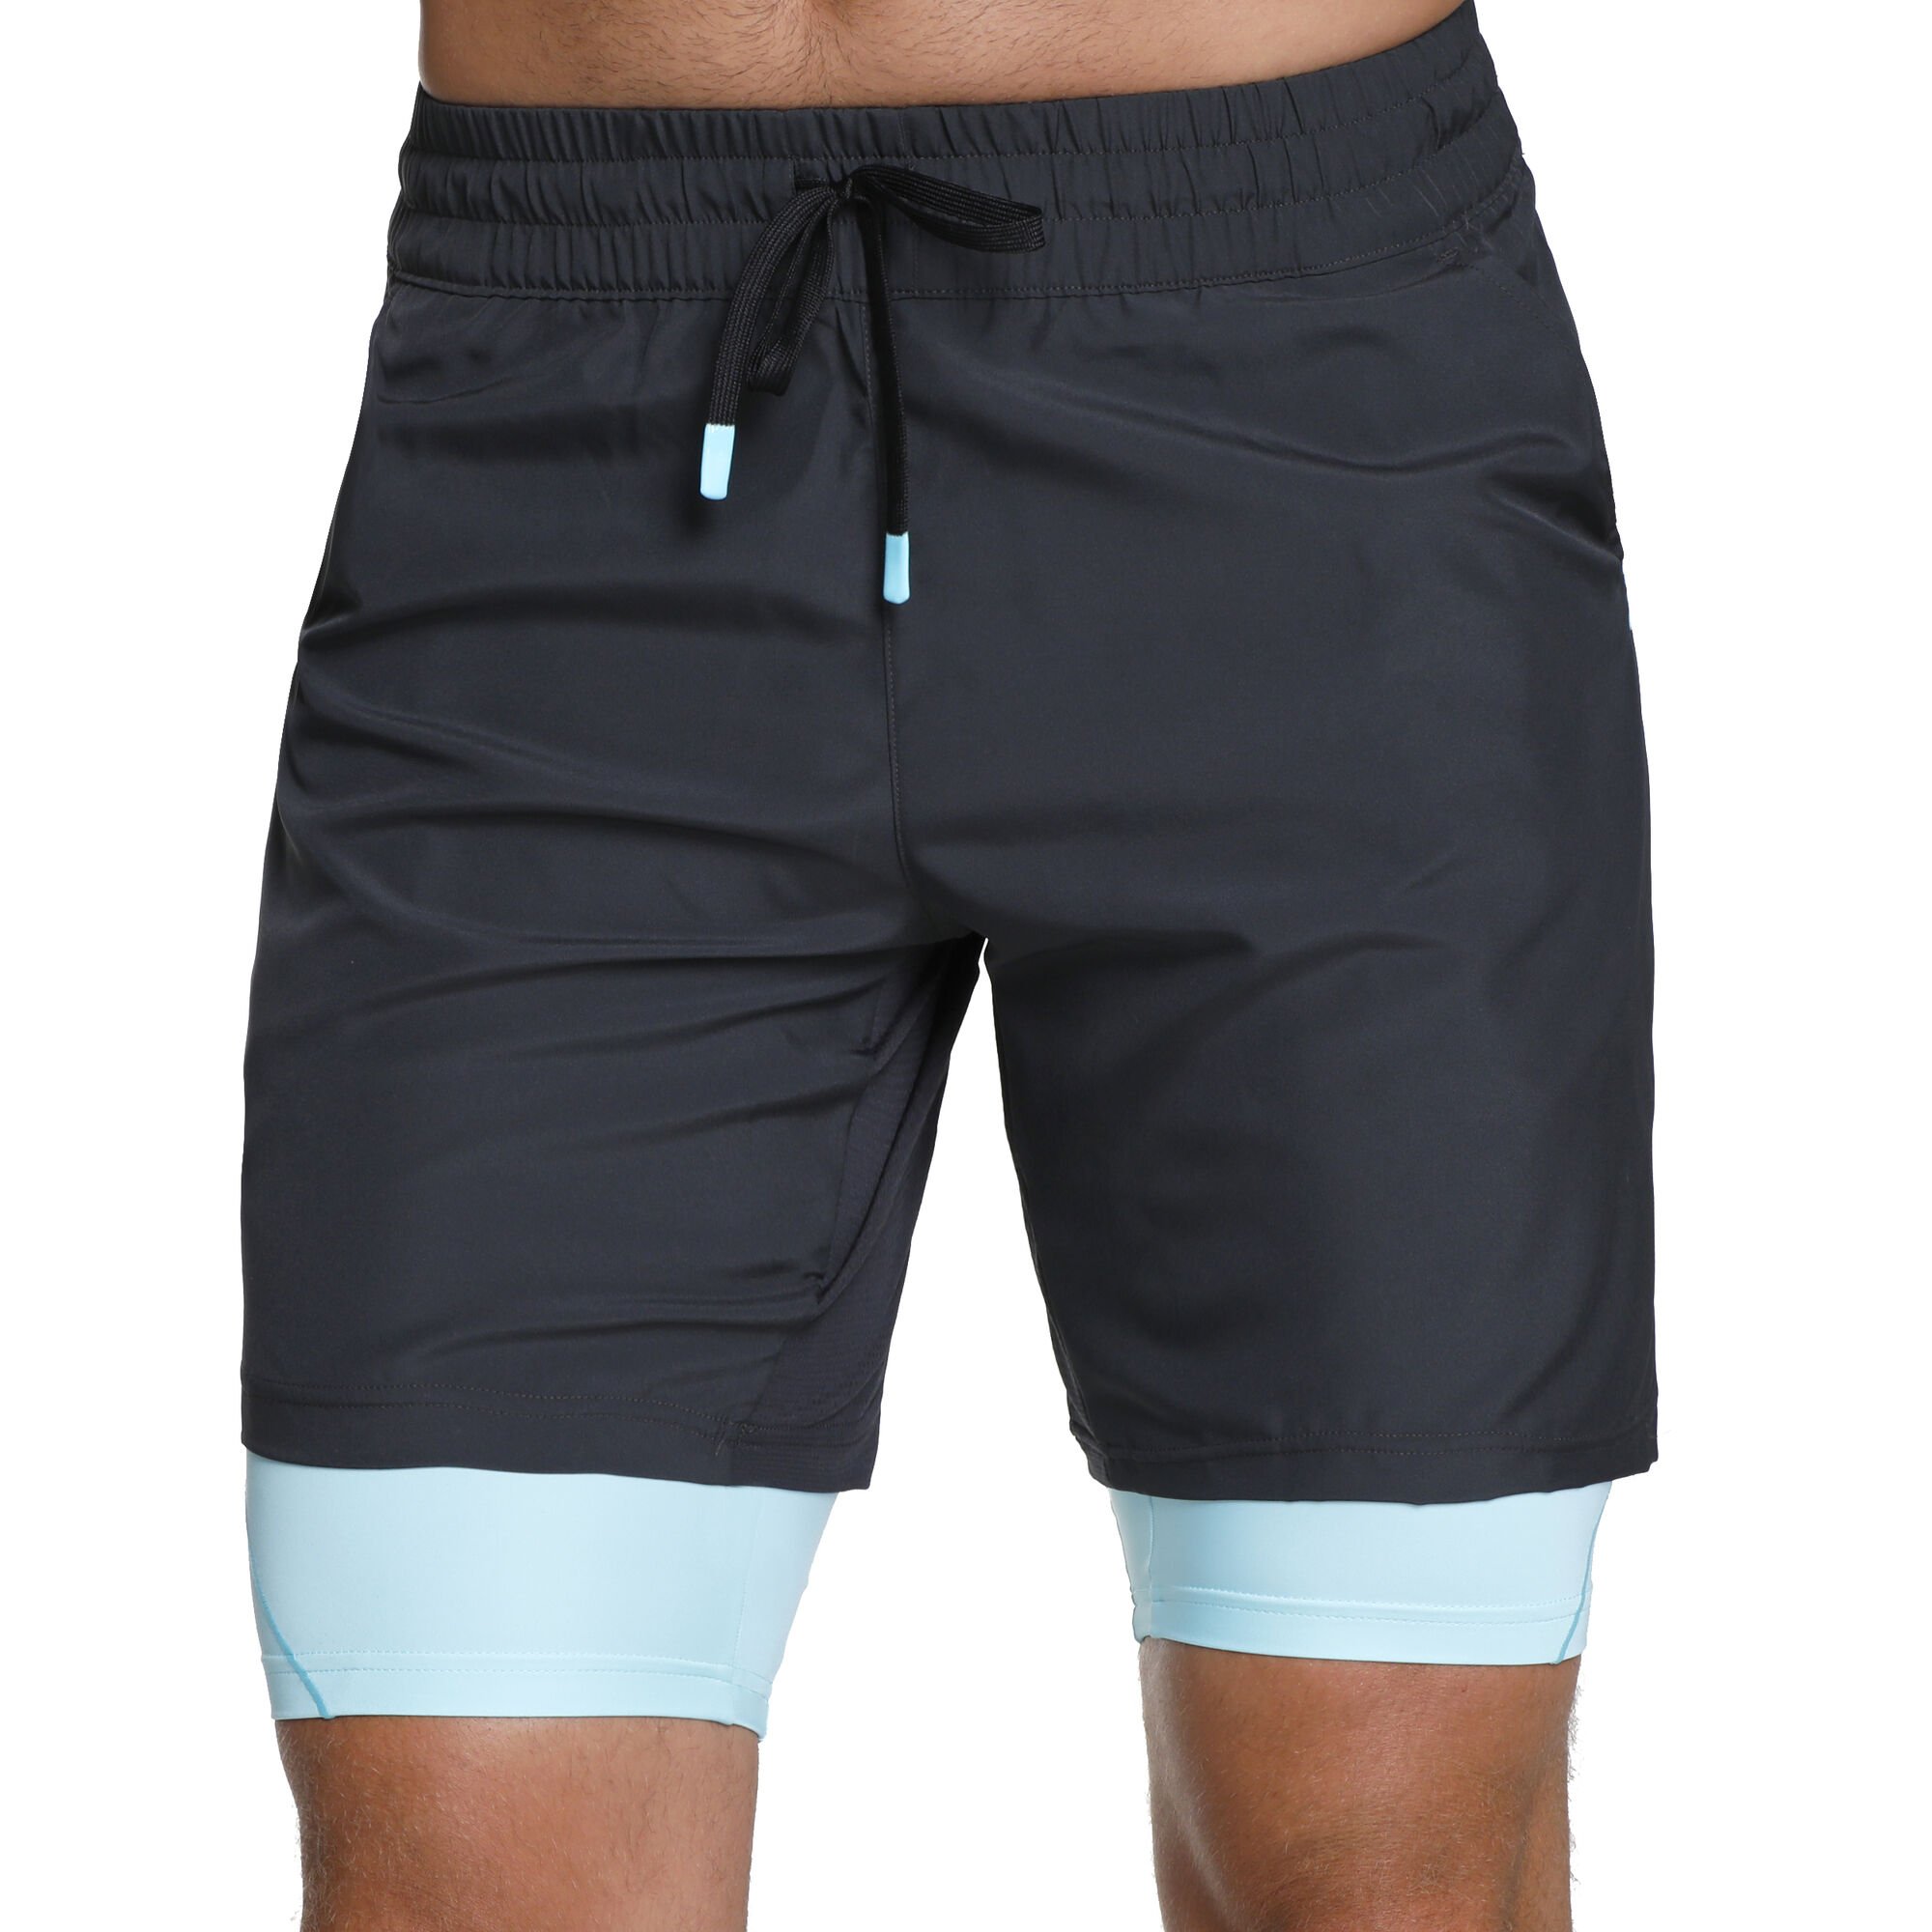 Paris 2in1 Shorts Men - Dark Grey, Turquoise